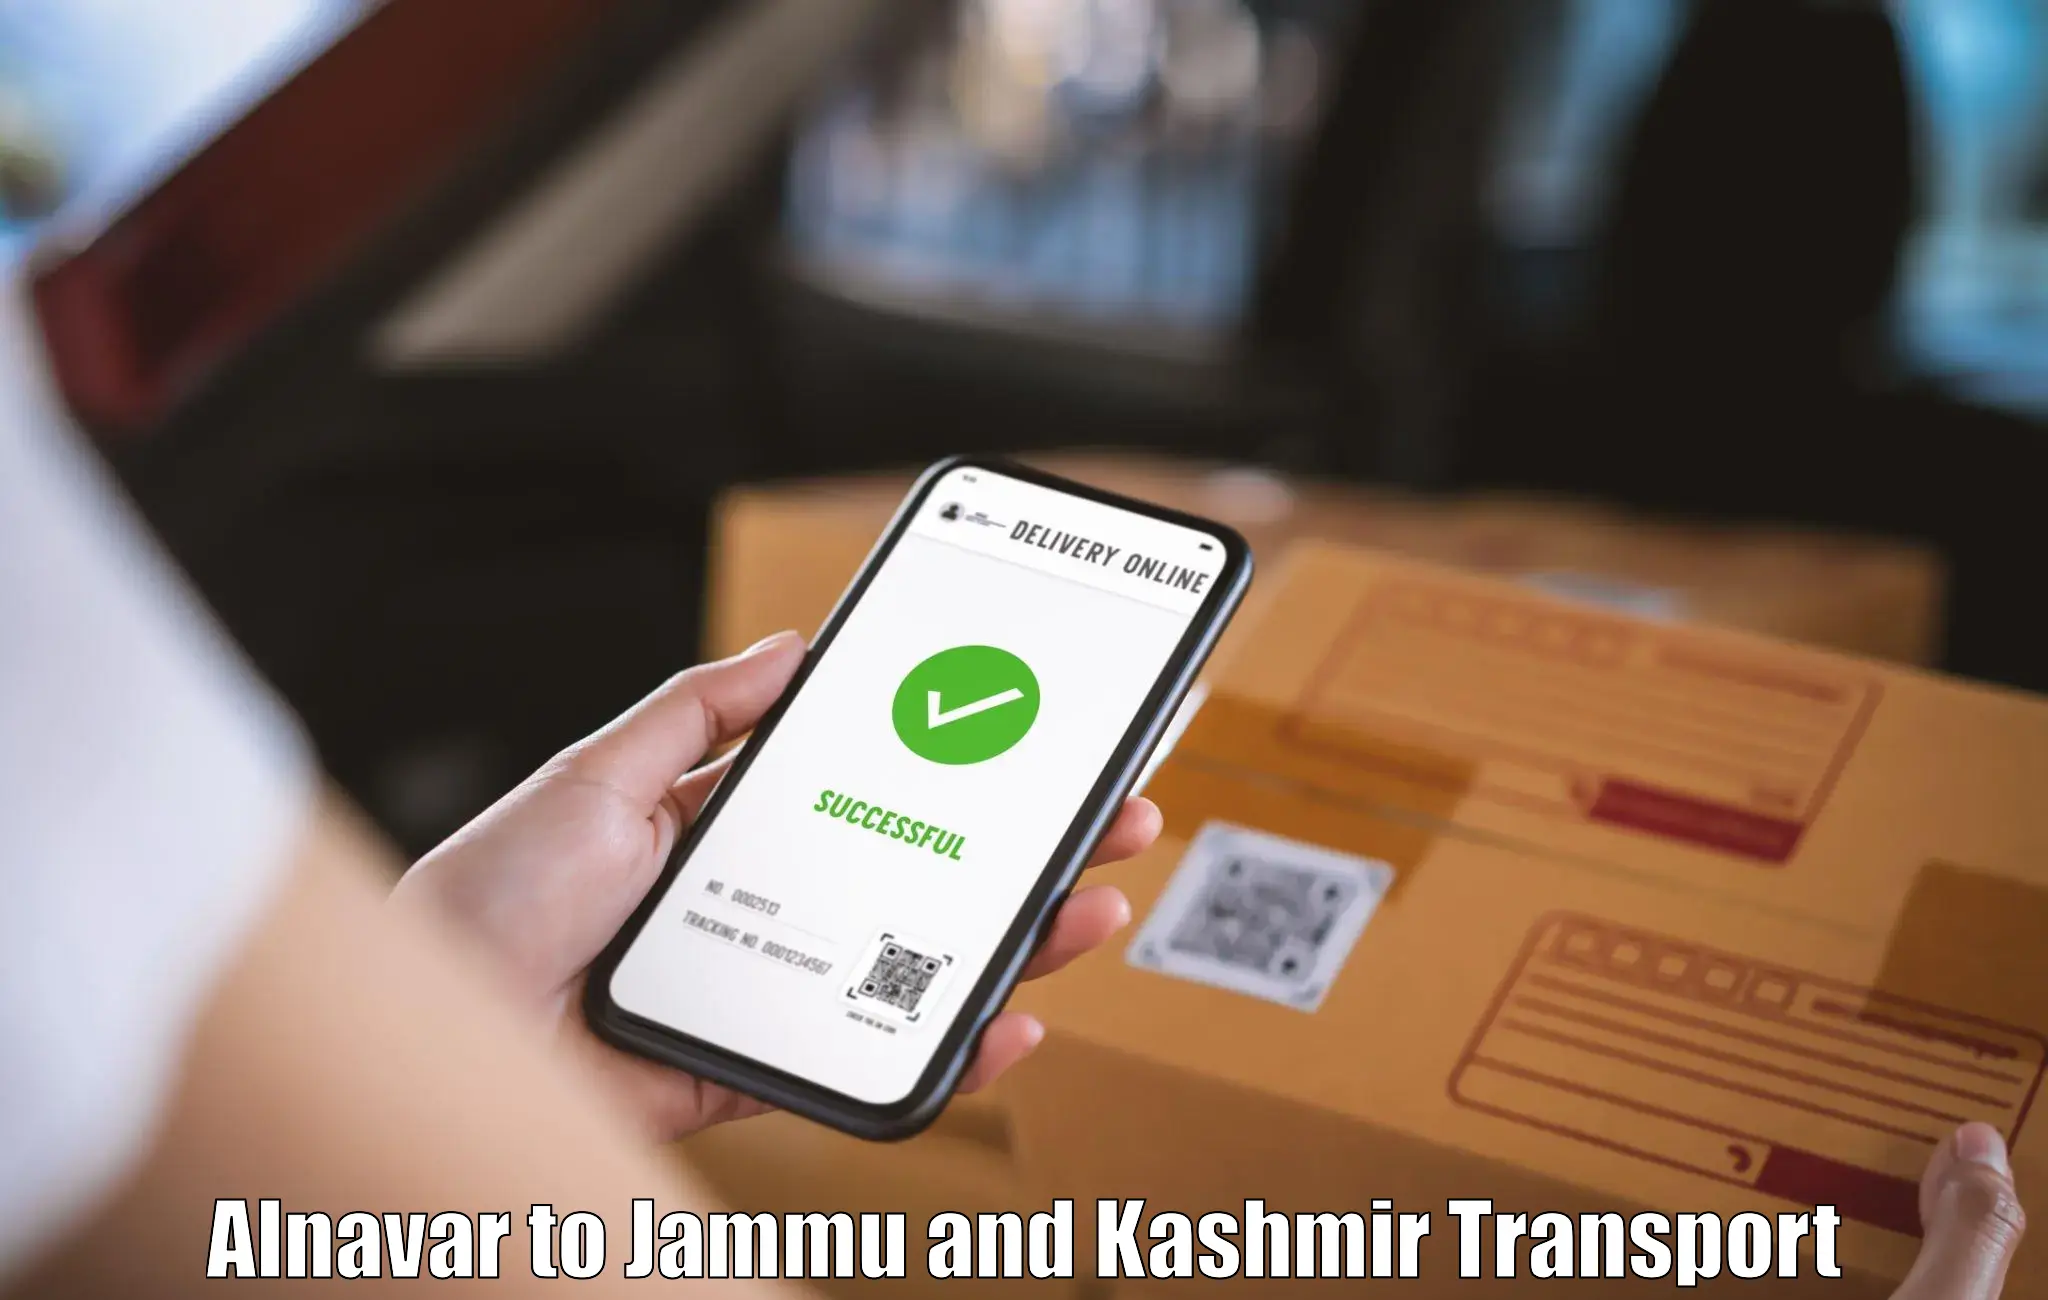 Transport shared services Alnavar to Srinagar Kashmir